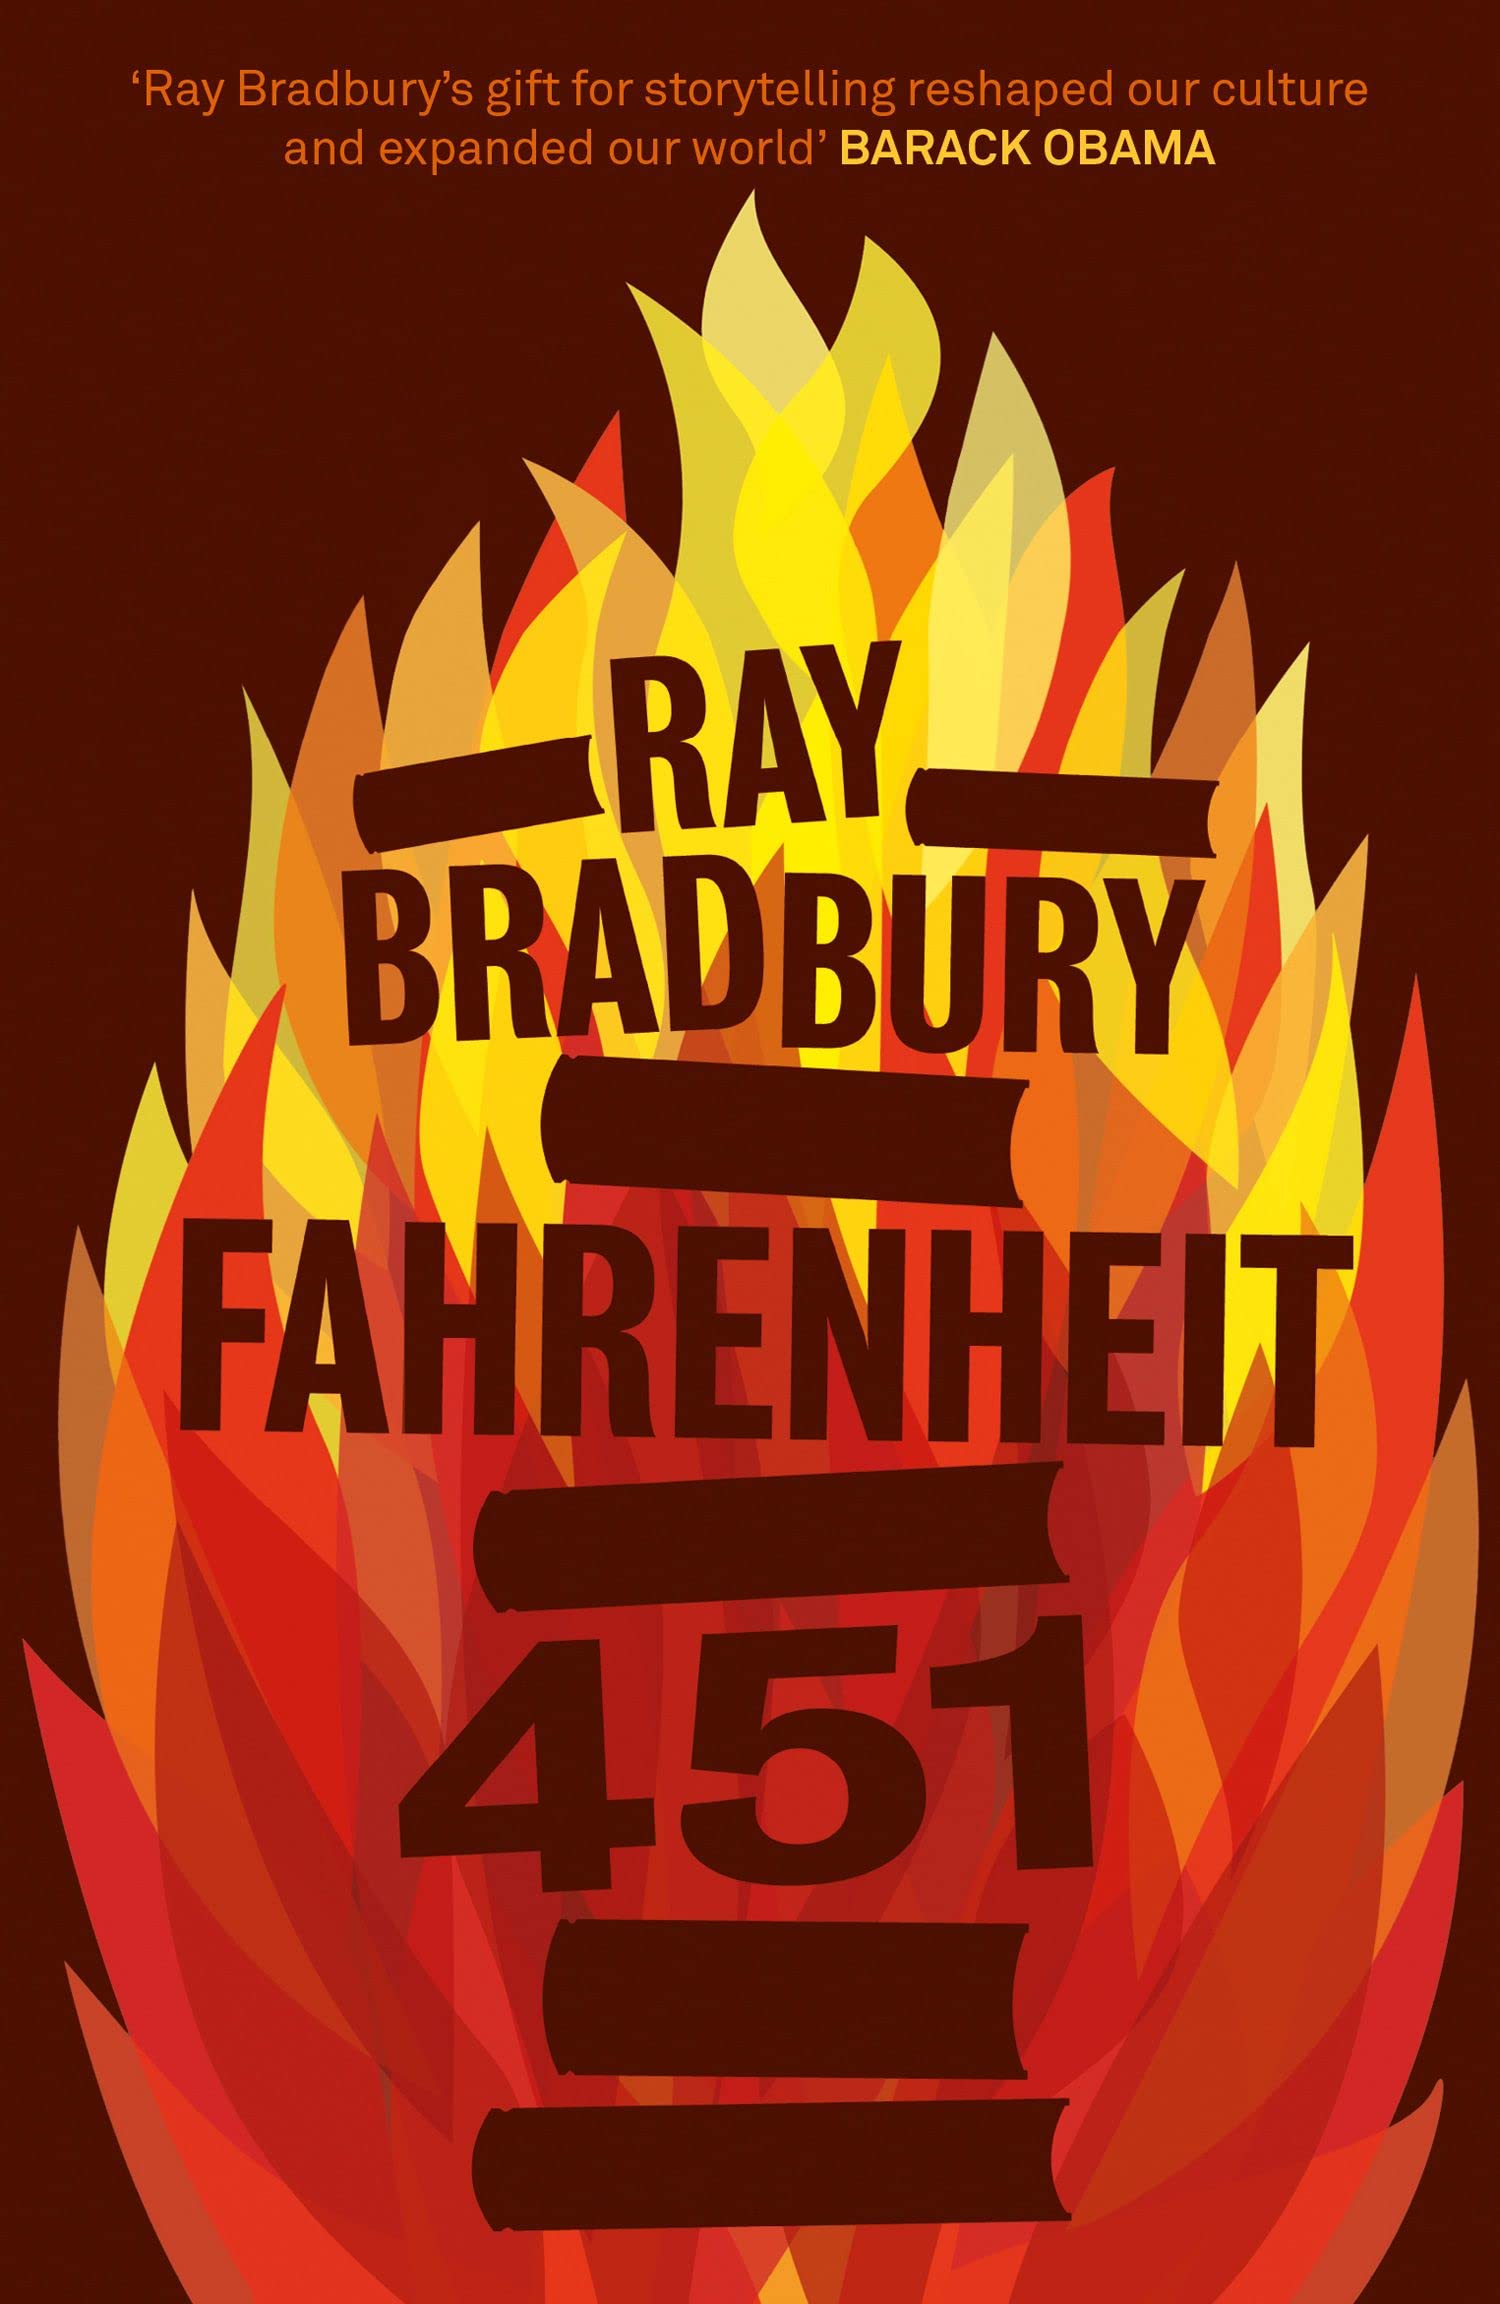 Farenheit-451-Ray-Bradbury